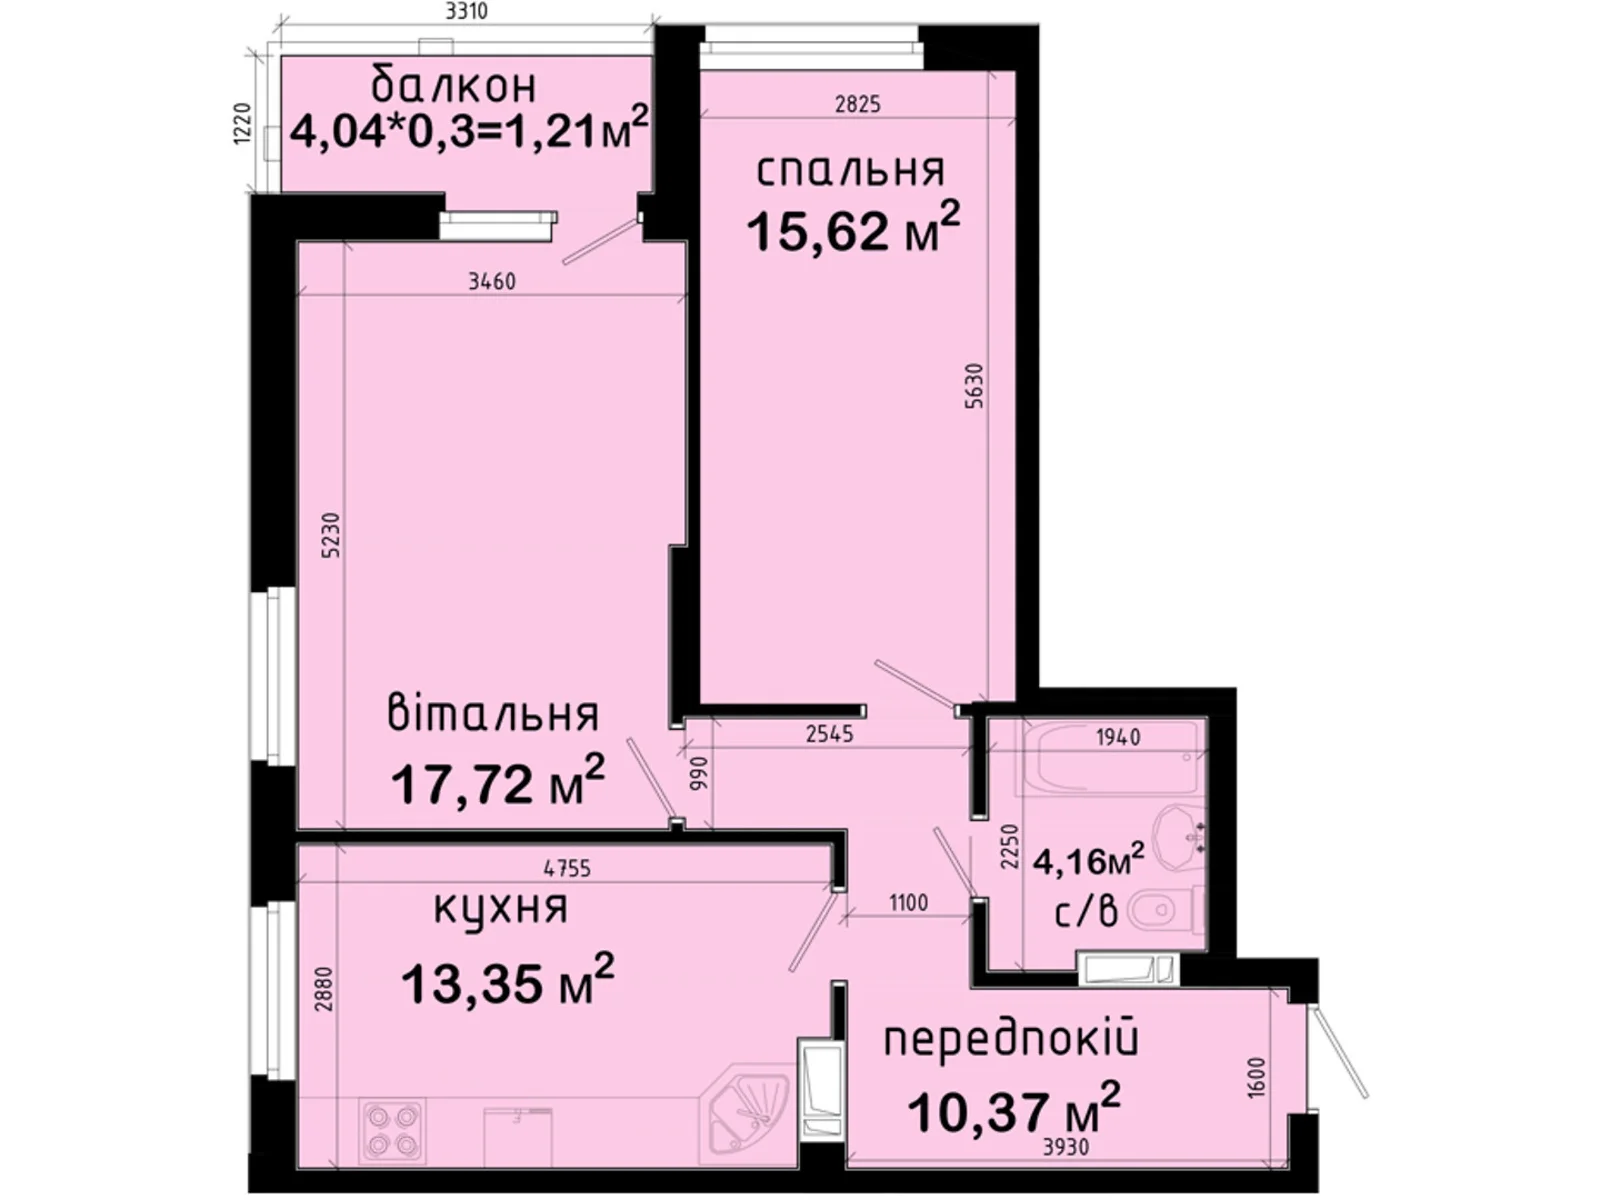 Продается 2-комнатная квартира 62.43 кв. м в Киеве, просп. Академика Глушкова, 42